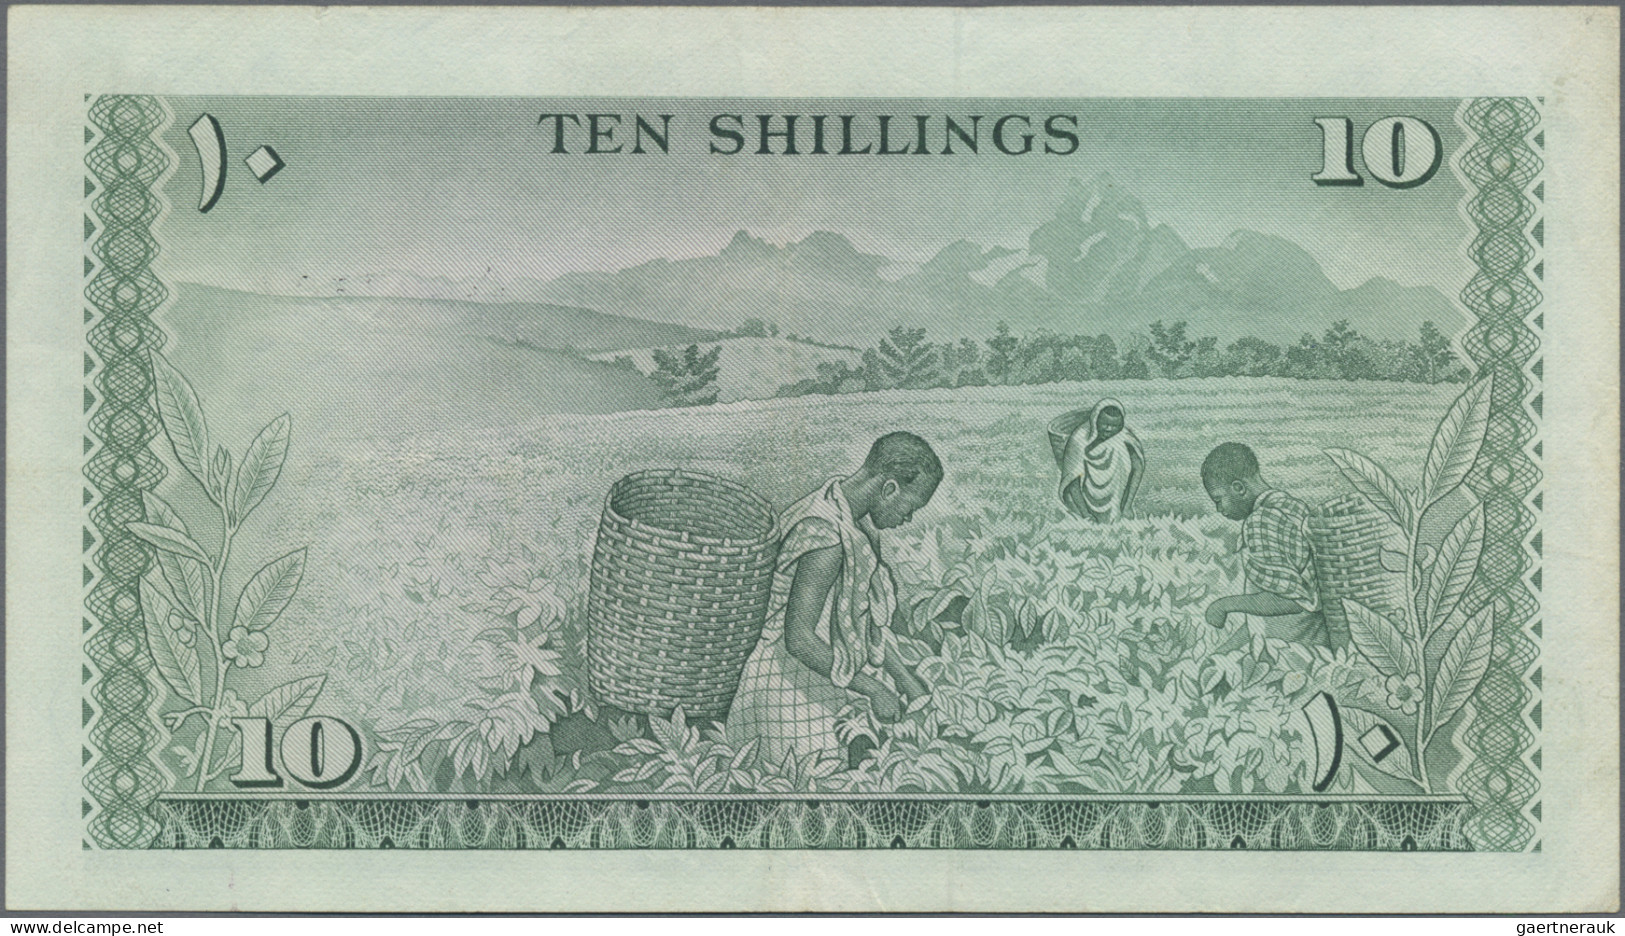 Kenya: Central Bank of Kenya, lot with 5 banknotes, series 1966/68, with 5, 10,